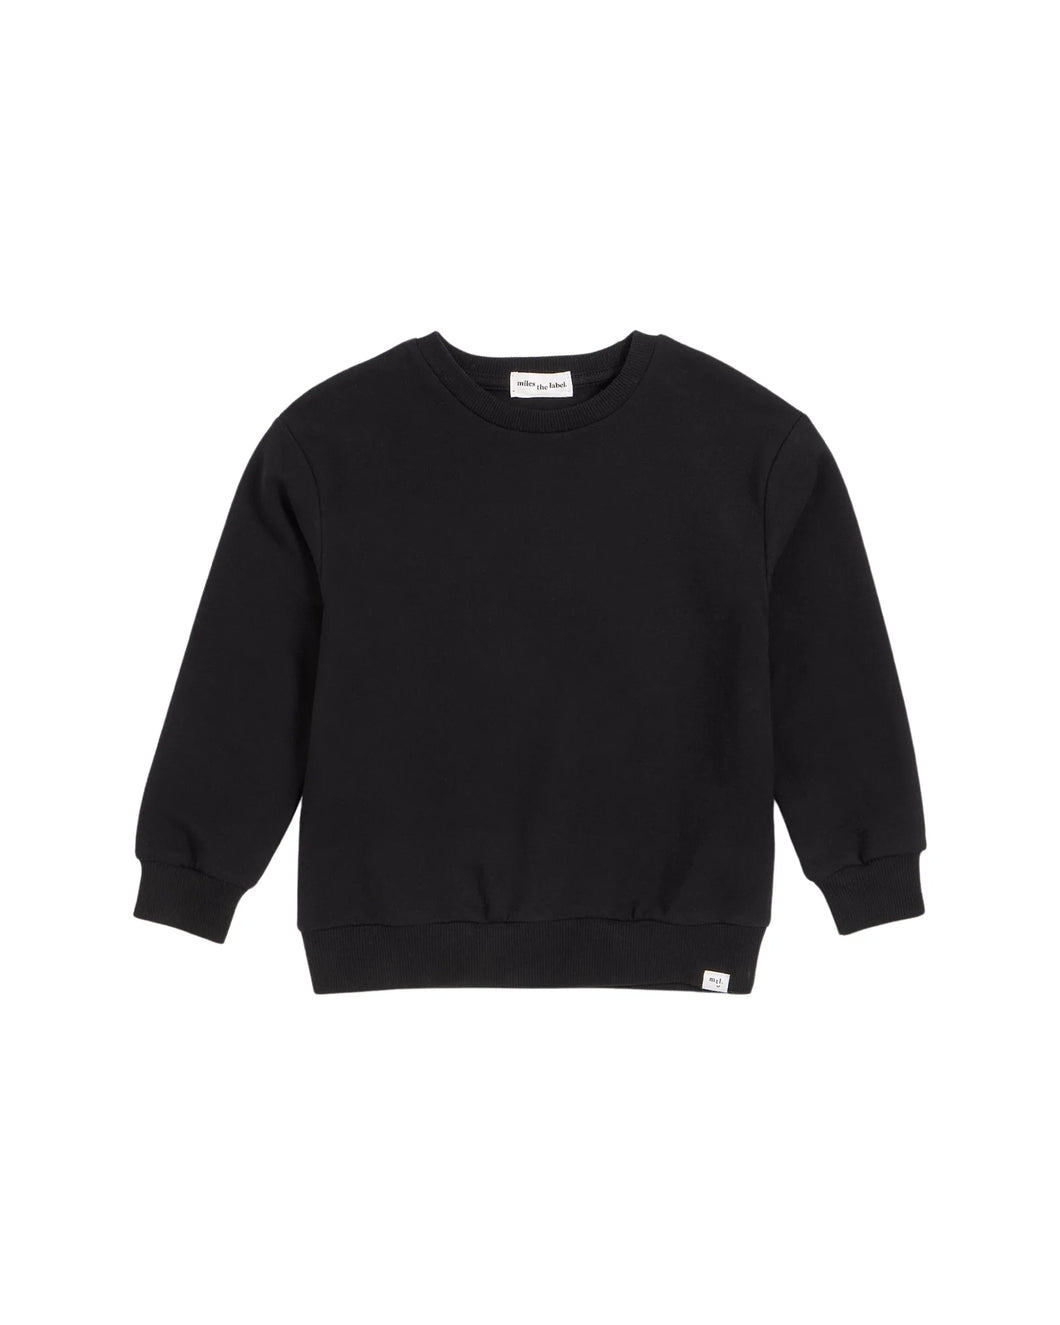 Miles the Label Infant/ Toddler Black Organic Cotton Sweatshirt: Sizes 3M to 24M